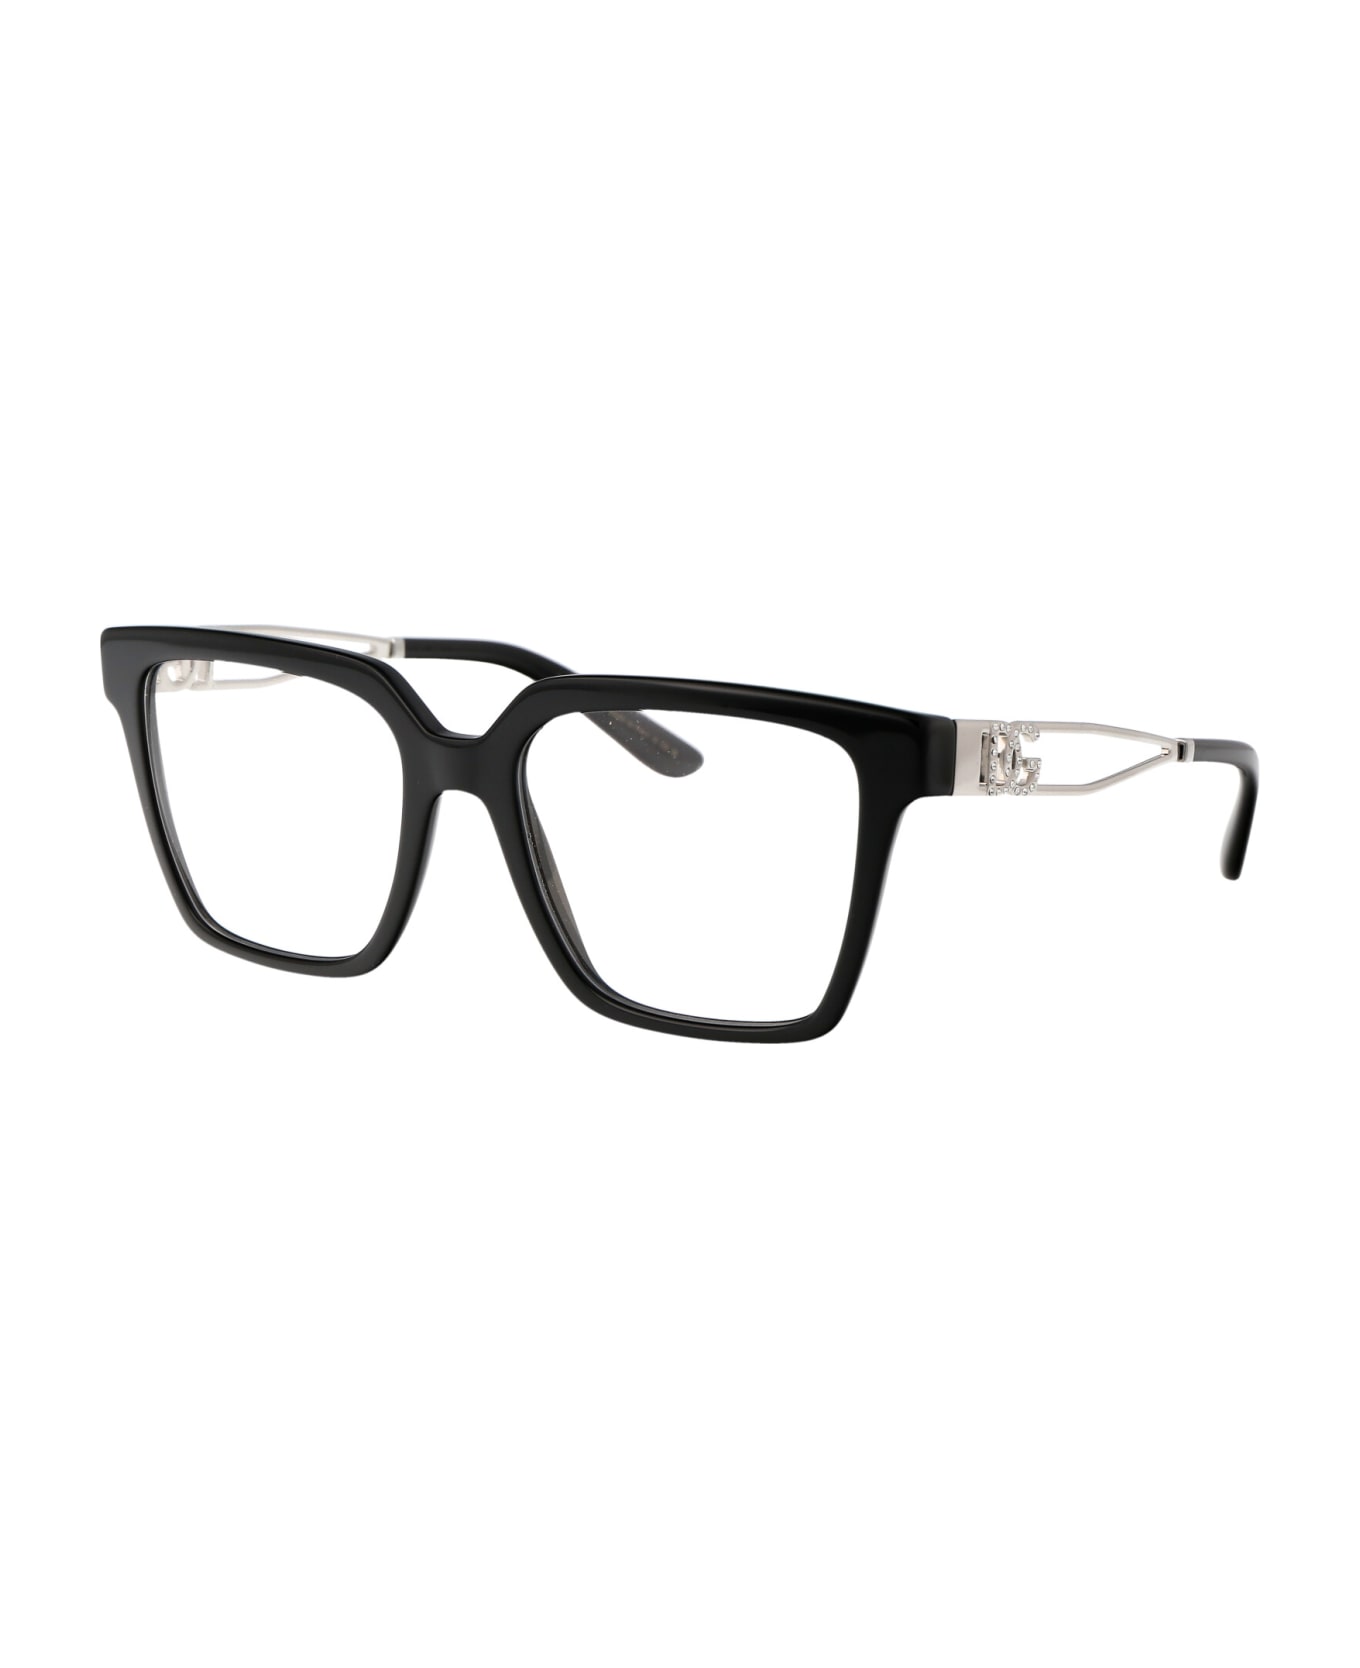 Dolce & Gabbana Eyewear 0dg3376b Glasses - 501 BLACK